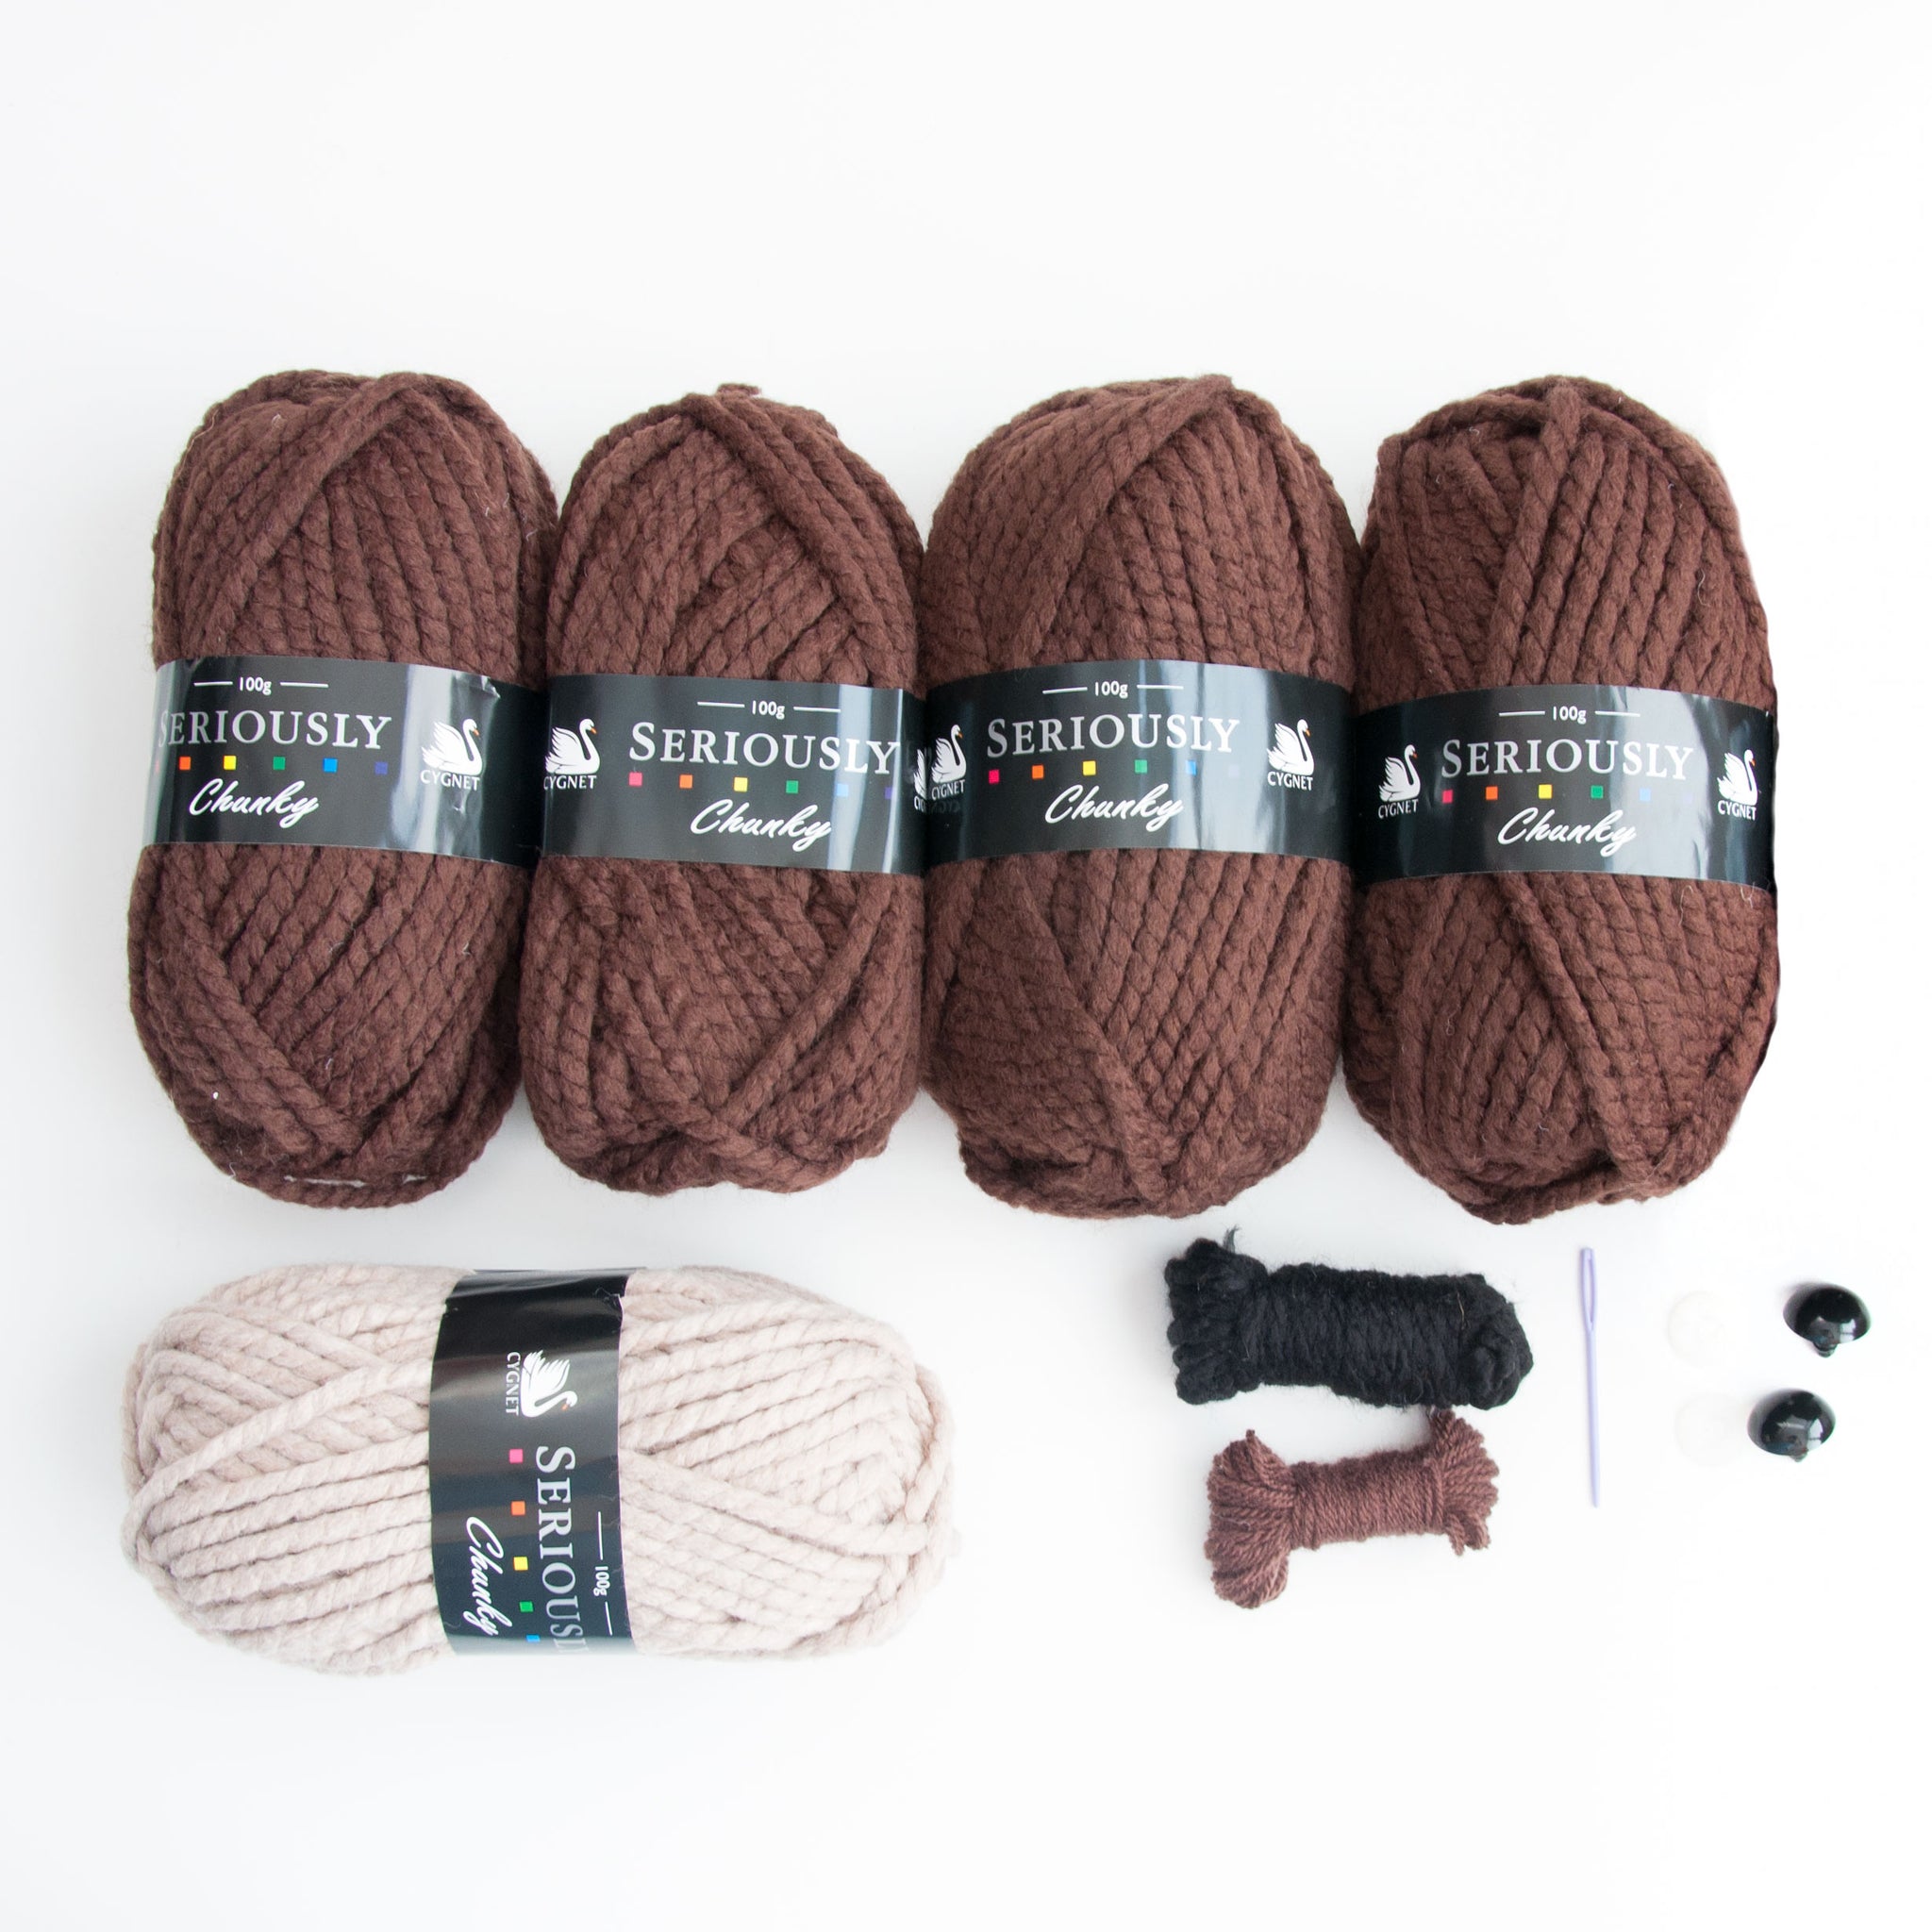 Giant Bison Head Knitting Kit